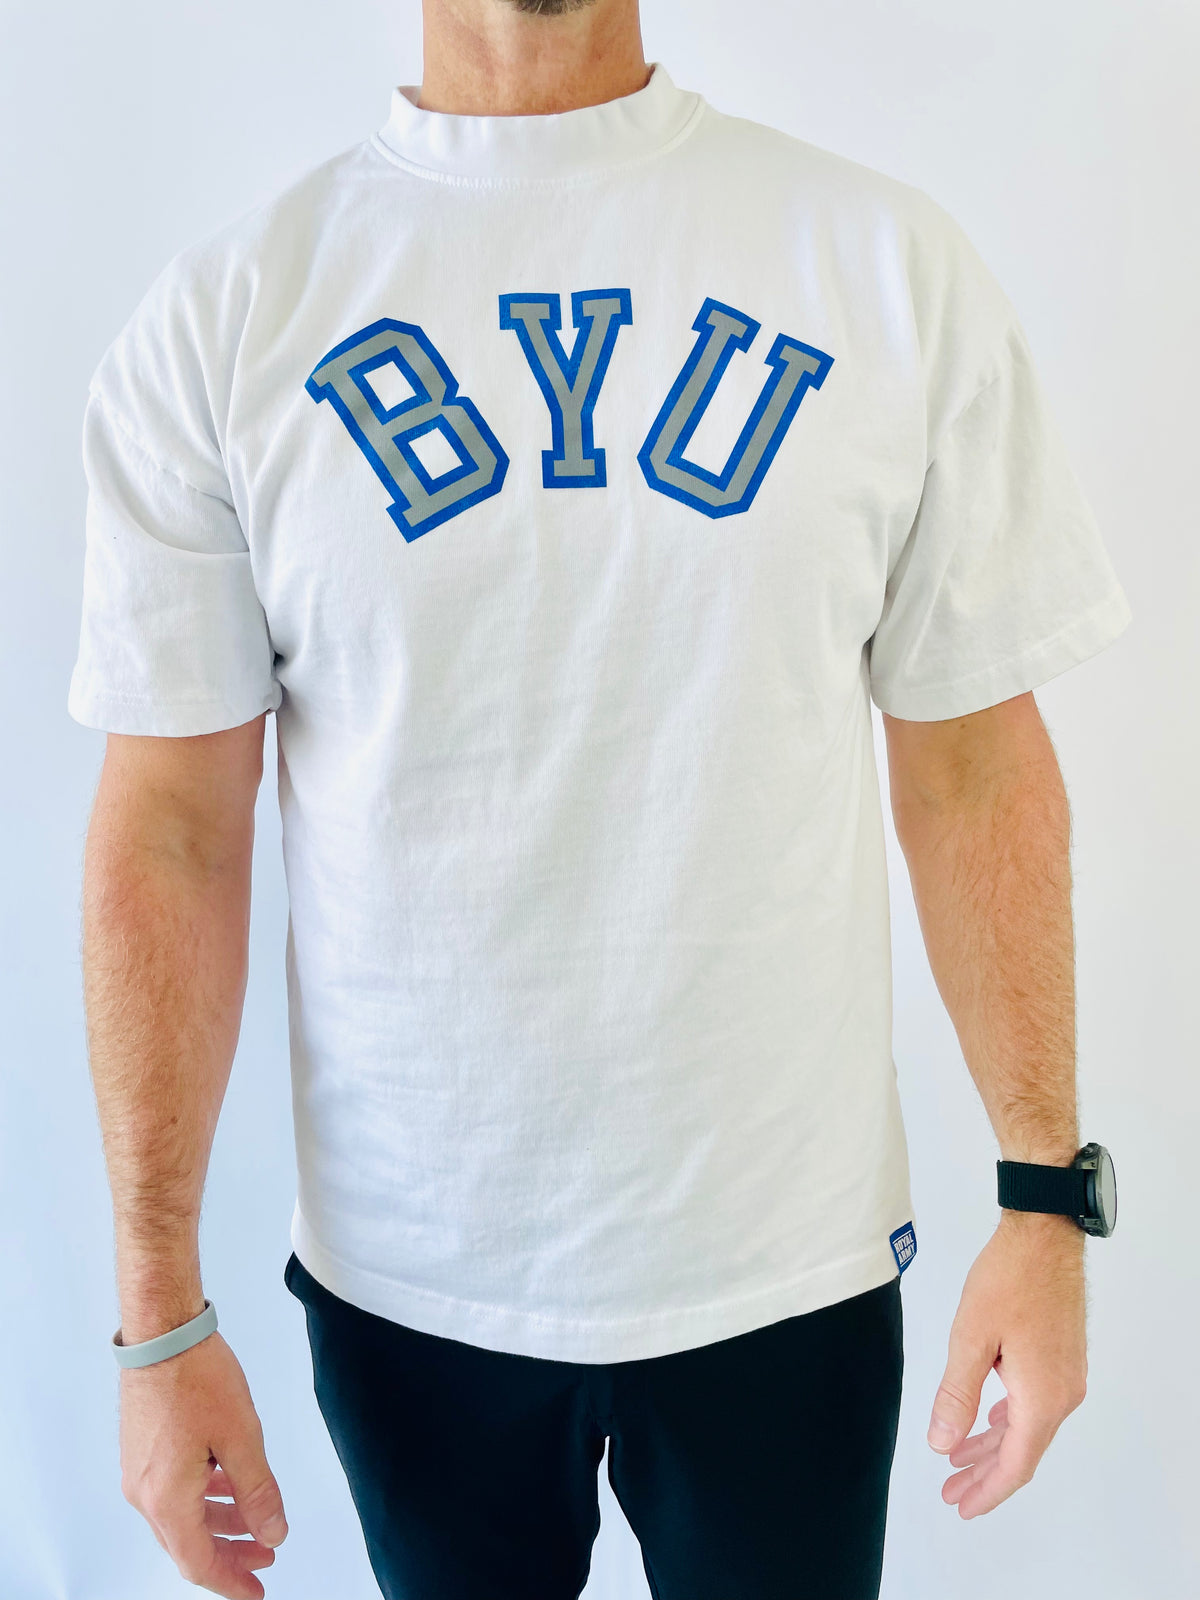 Classic Heavyweight Cotton Block BYU T-shirt